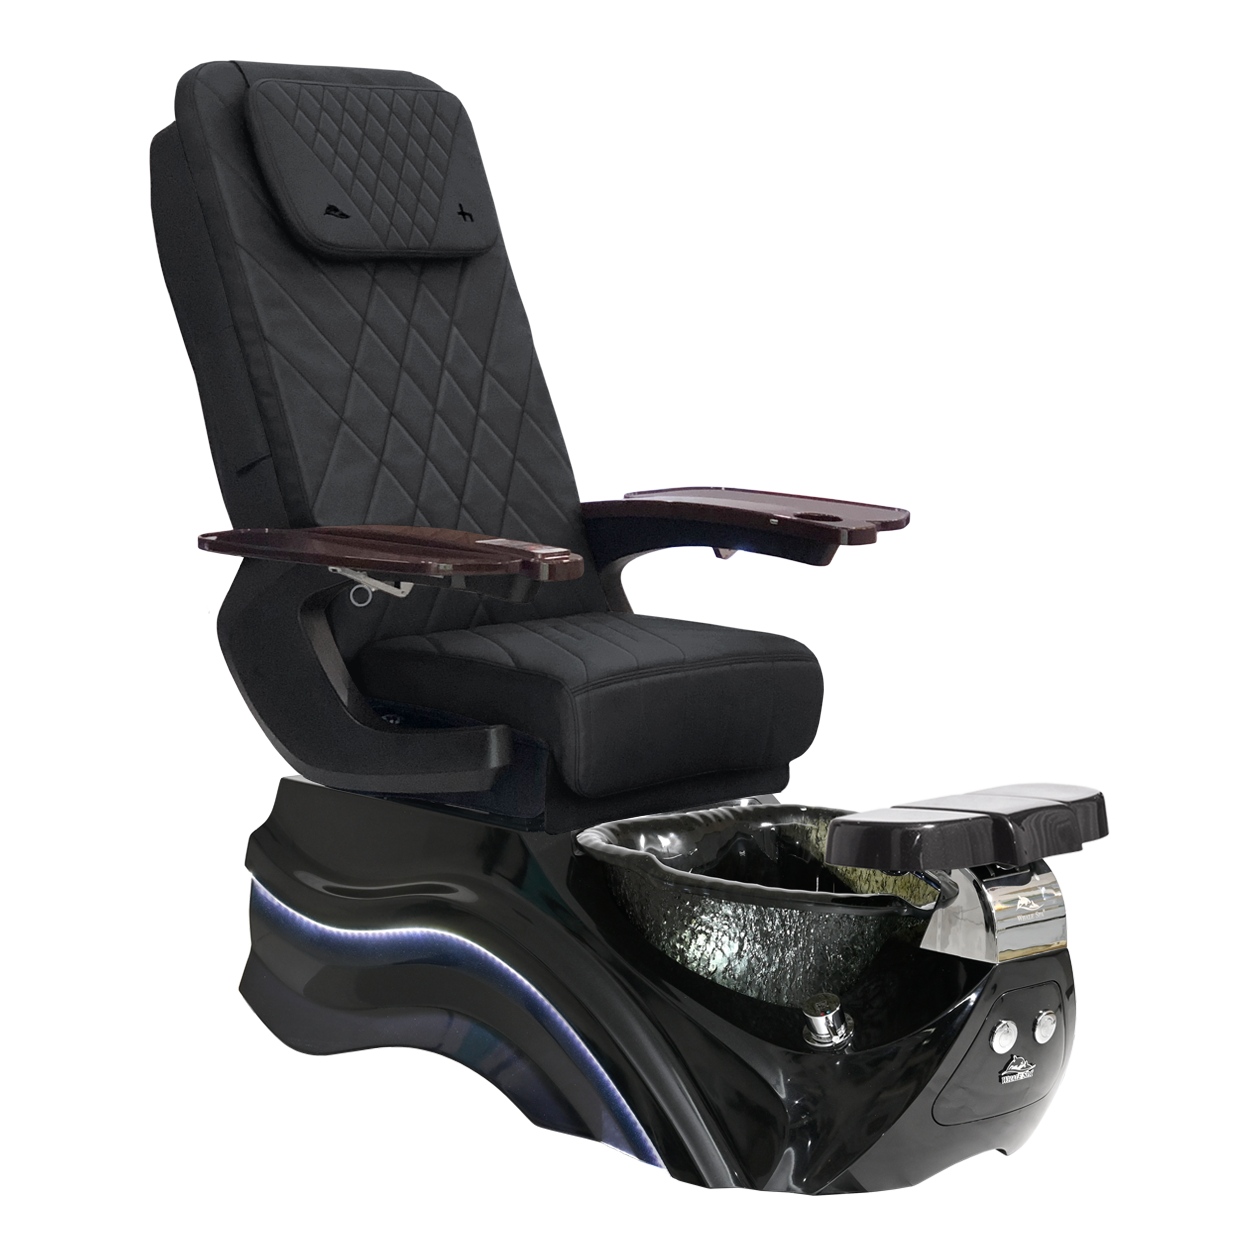 Whale Spa Taurus Pedicure Chair | Best Pedicure Chairs